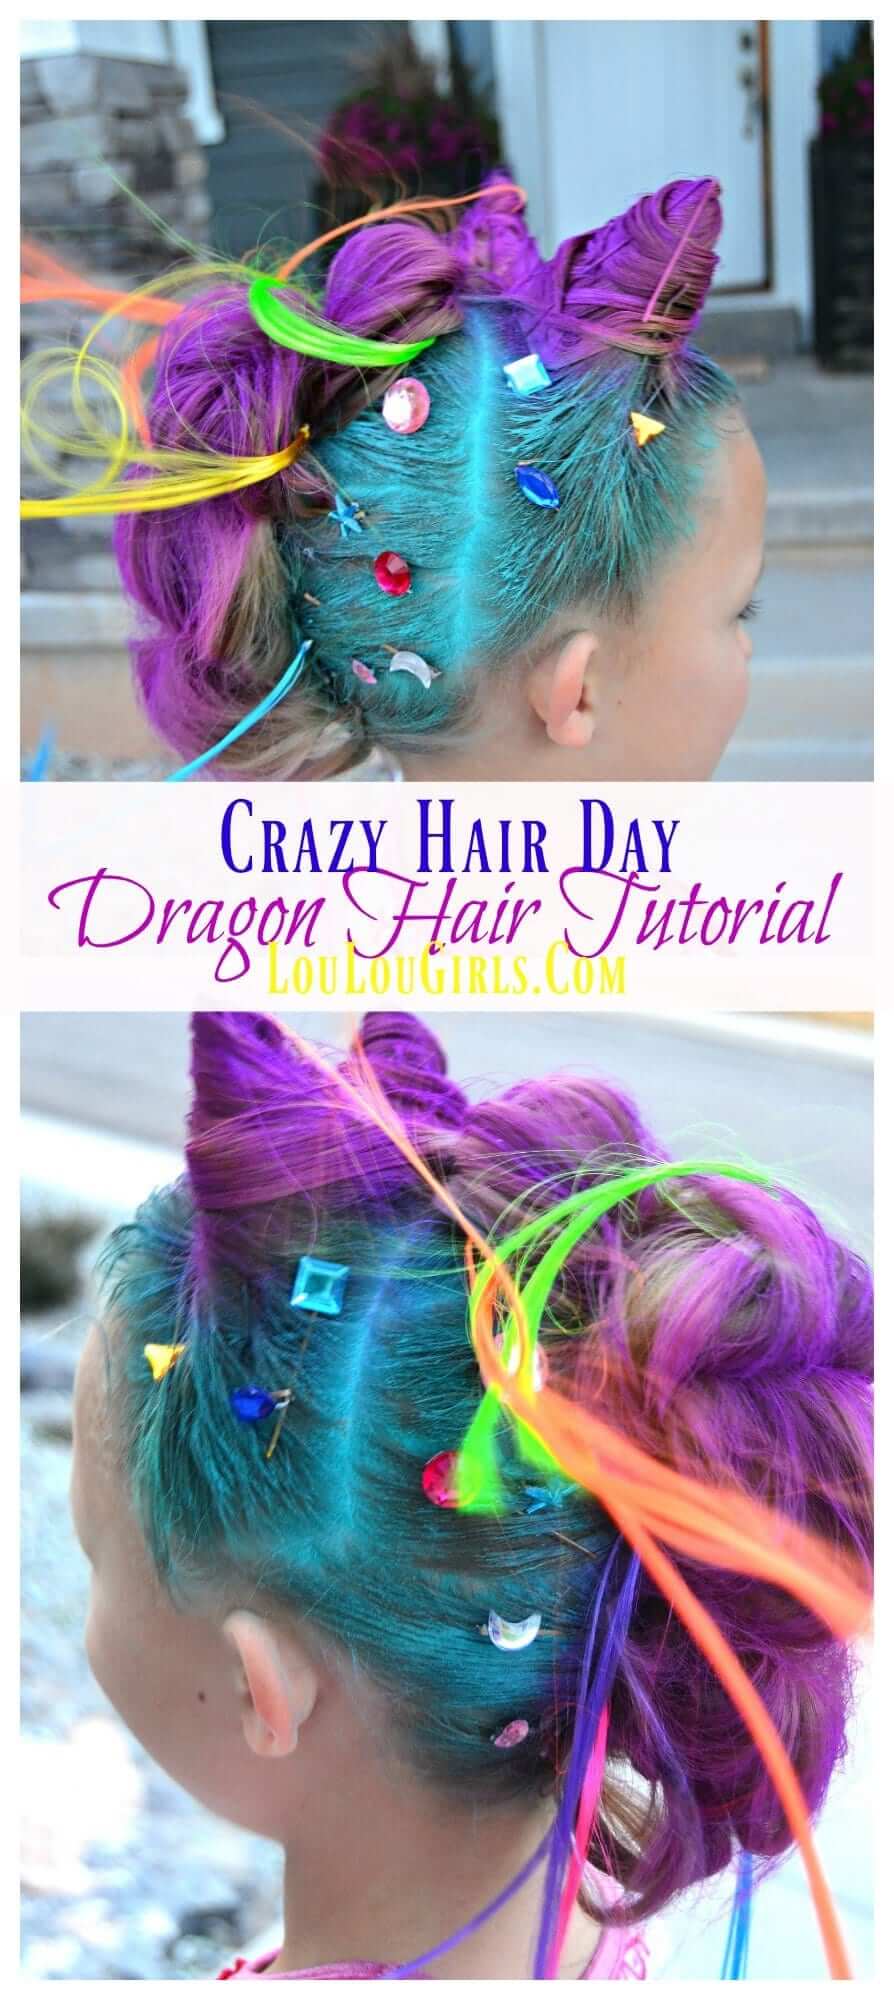 crazy-hair-day-tutorial-for-dragon-hair-little-girl-crazy-hair-day-idea